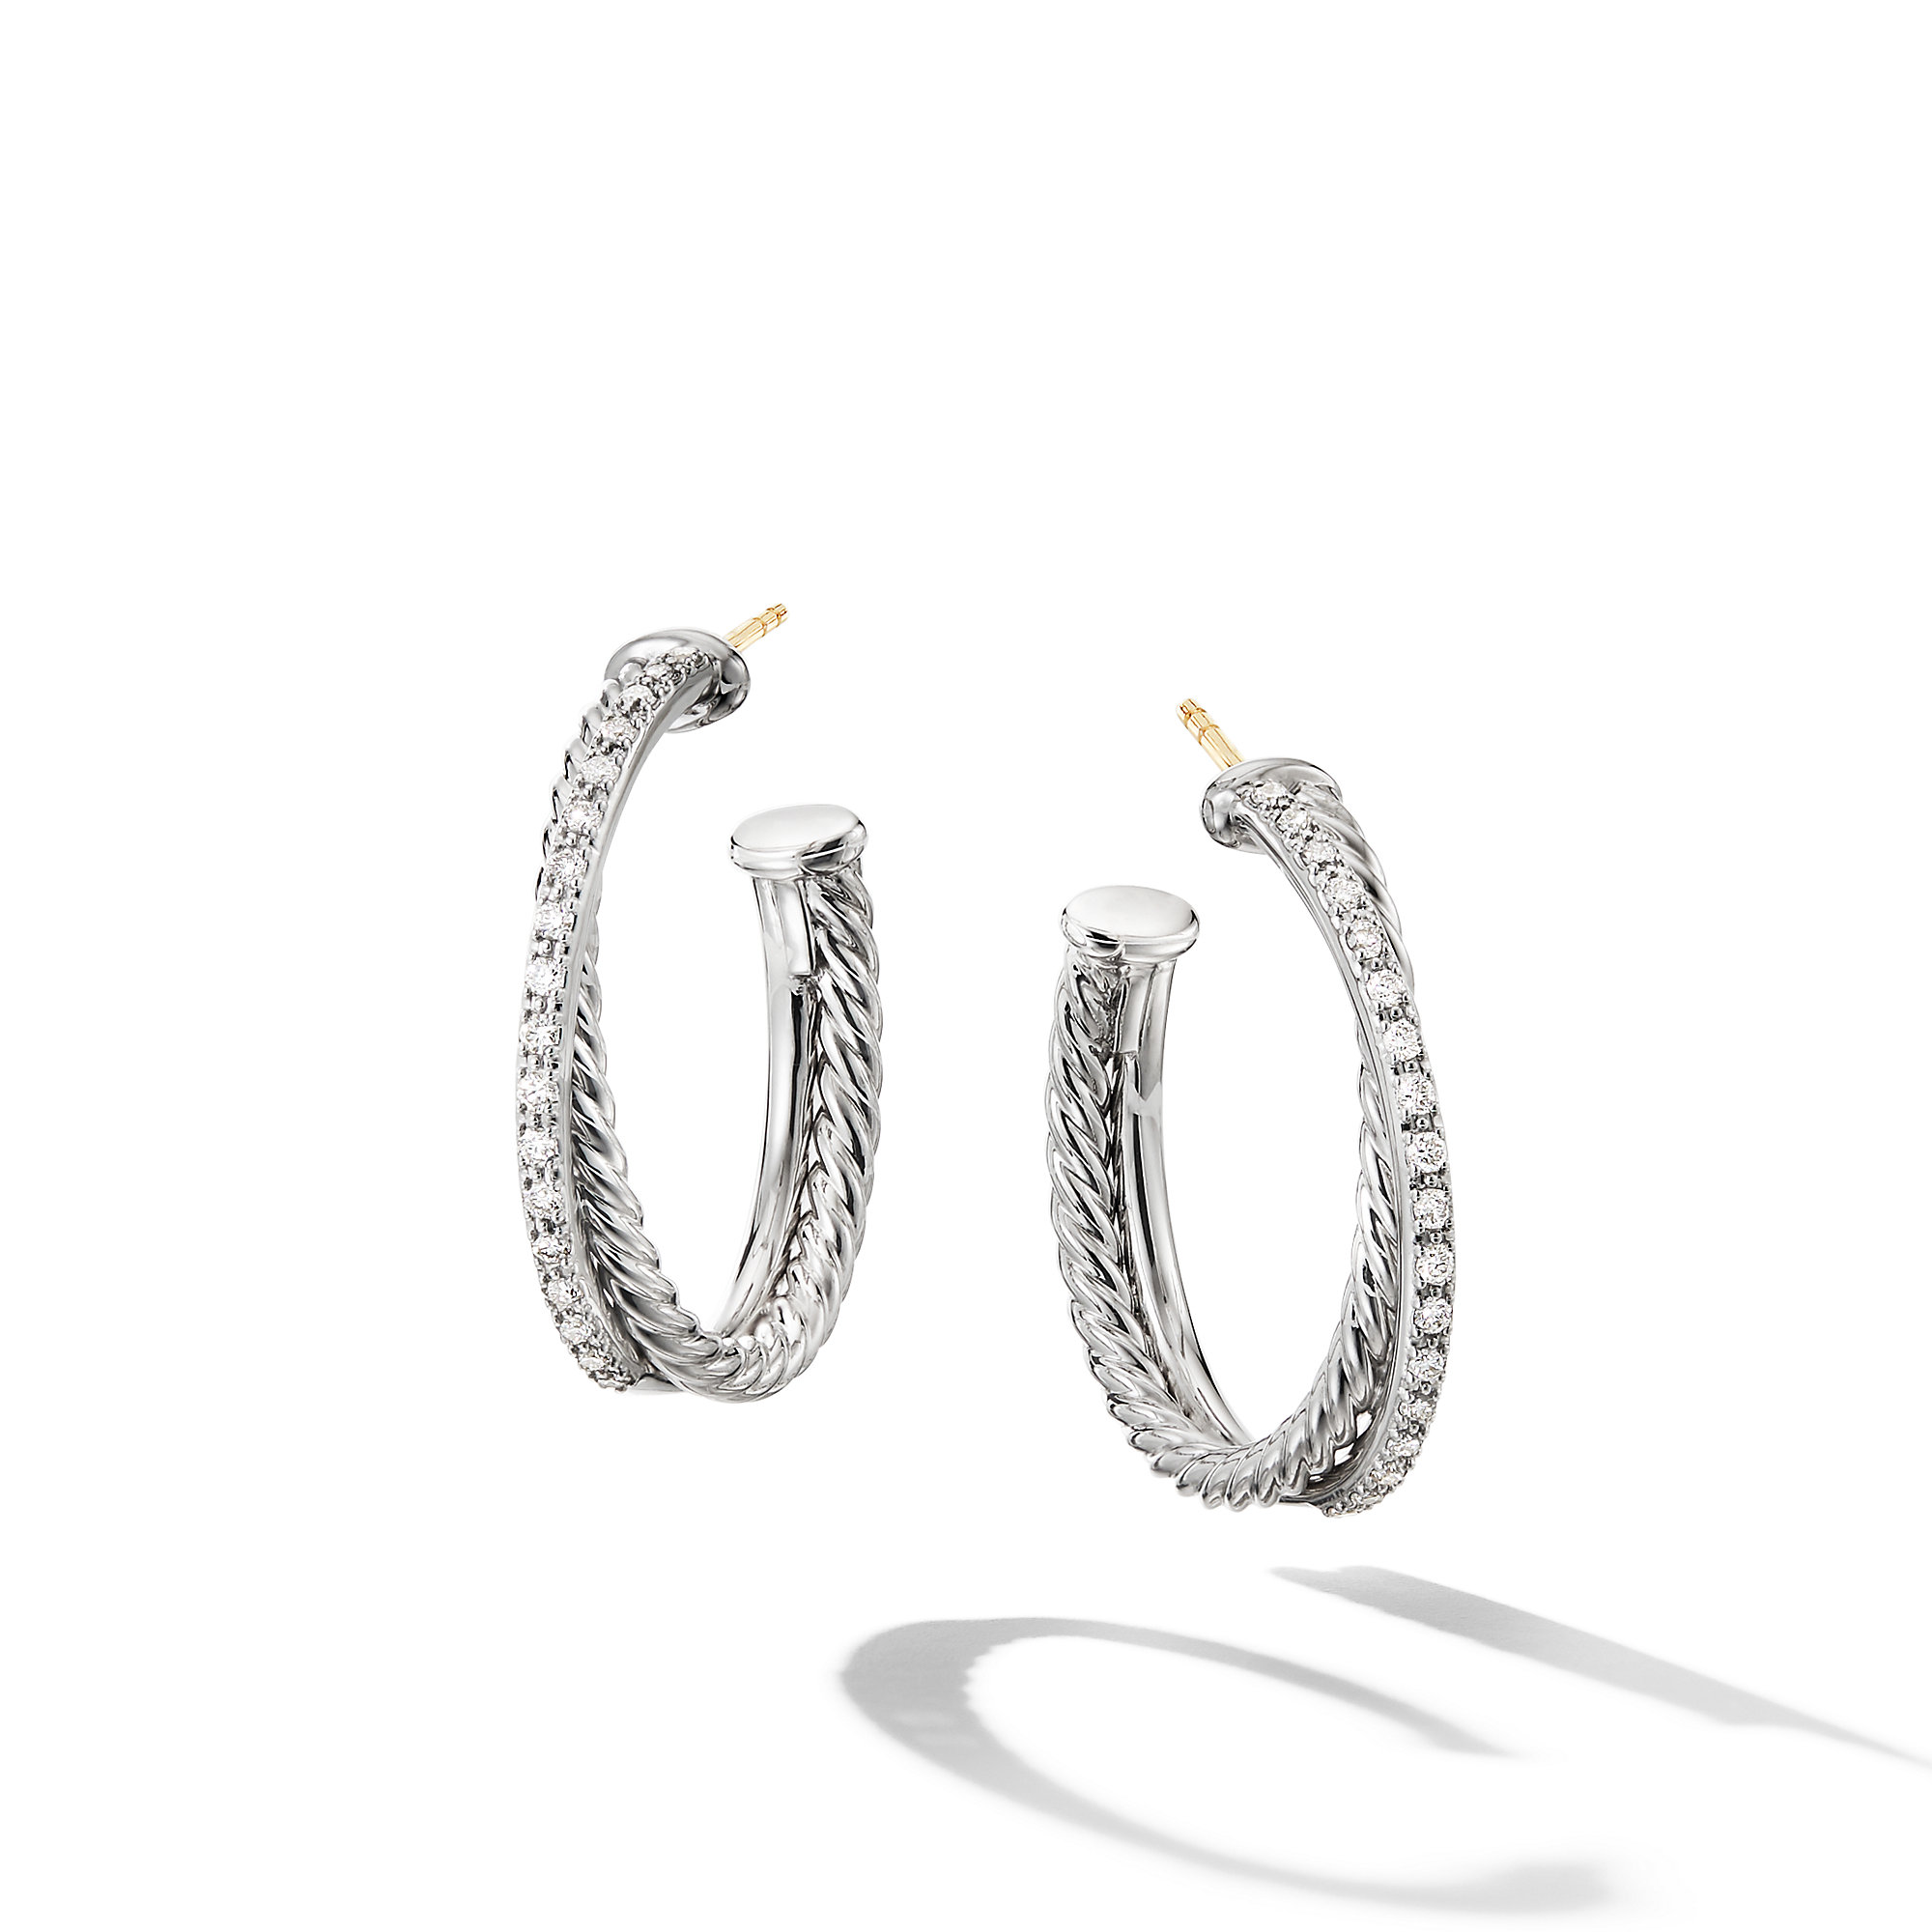 Crossover Hoop Earrings in Sterling Silver with Diamonds, 26.5mm